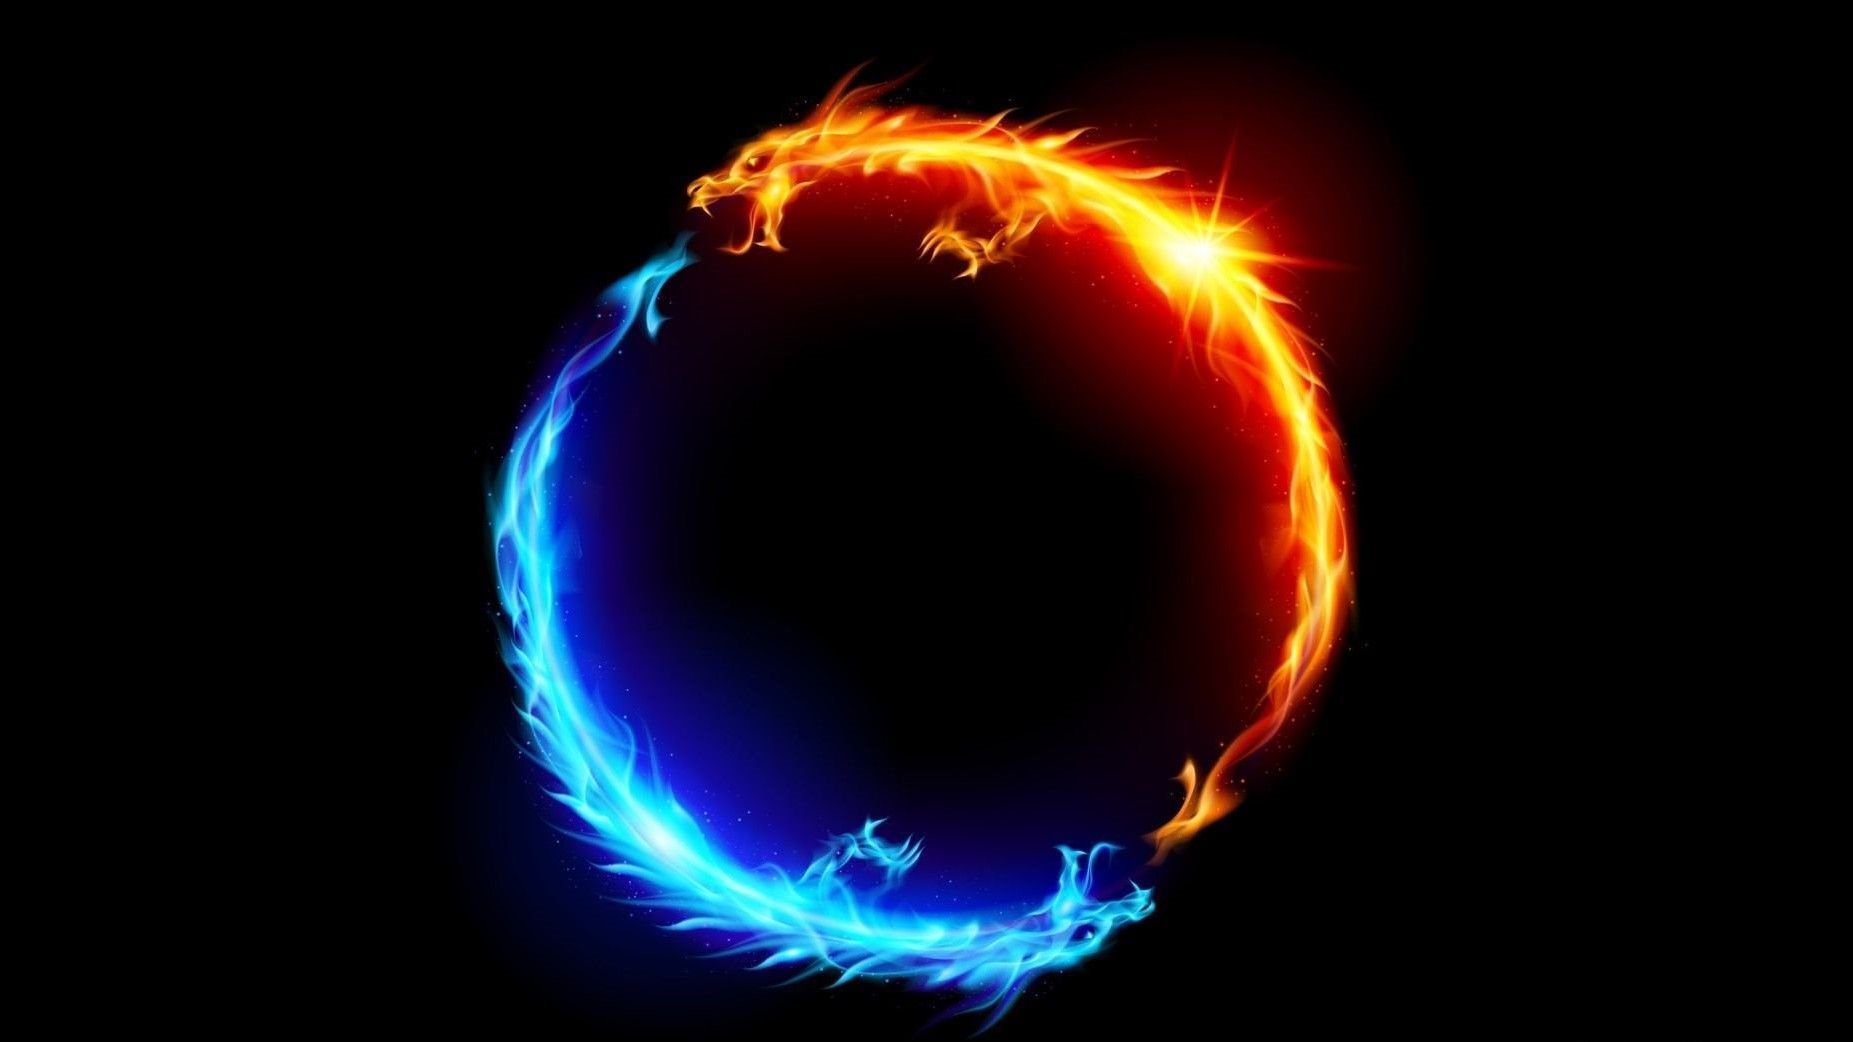 Fire And Ice Dragon Wallpaper. Yin yang image, Fire and ice dragons, Yin yang